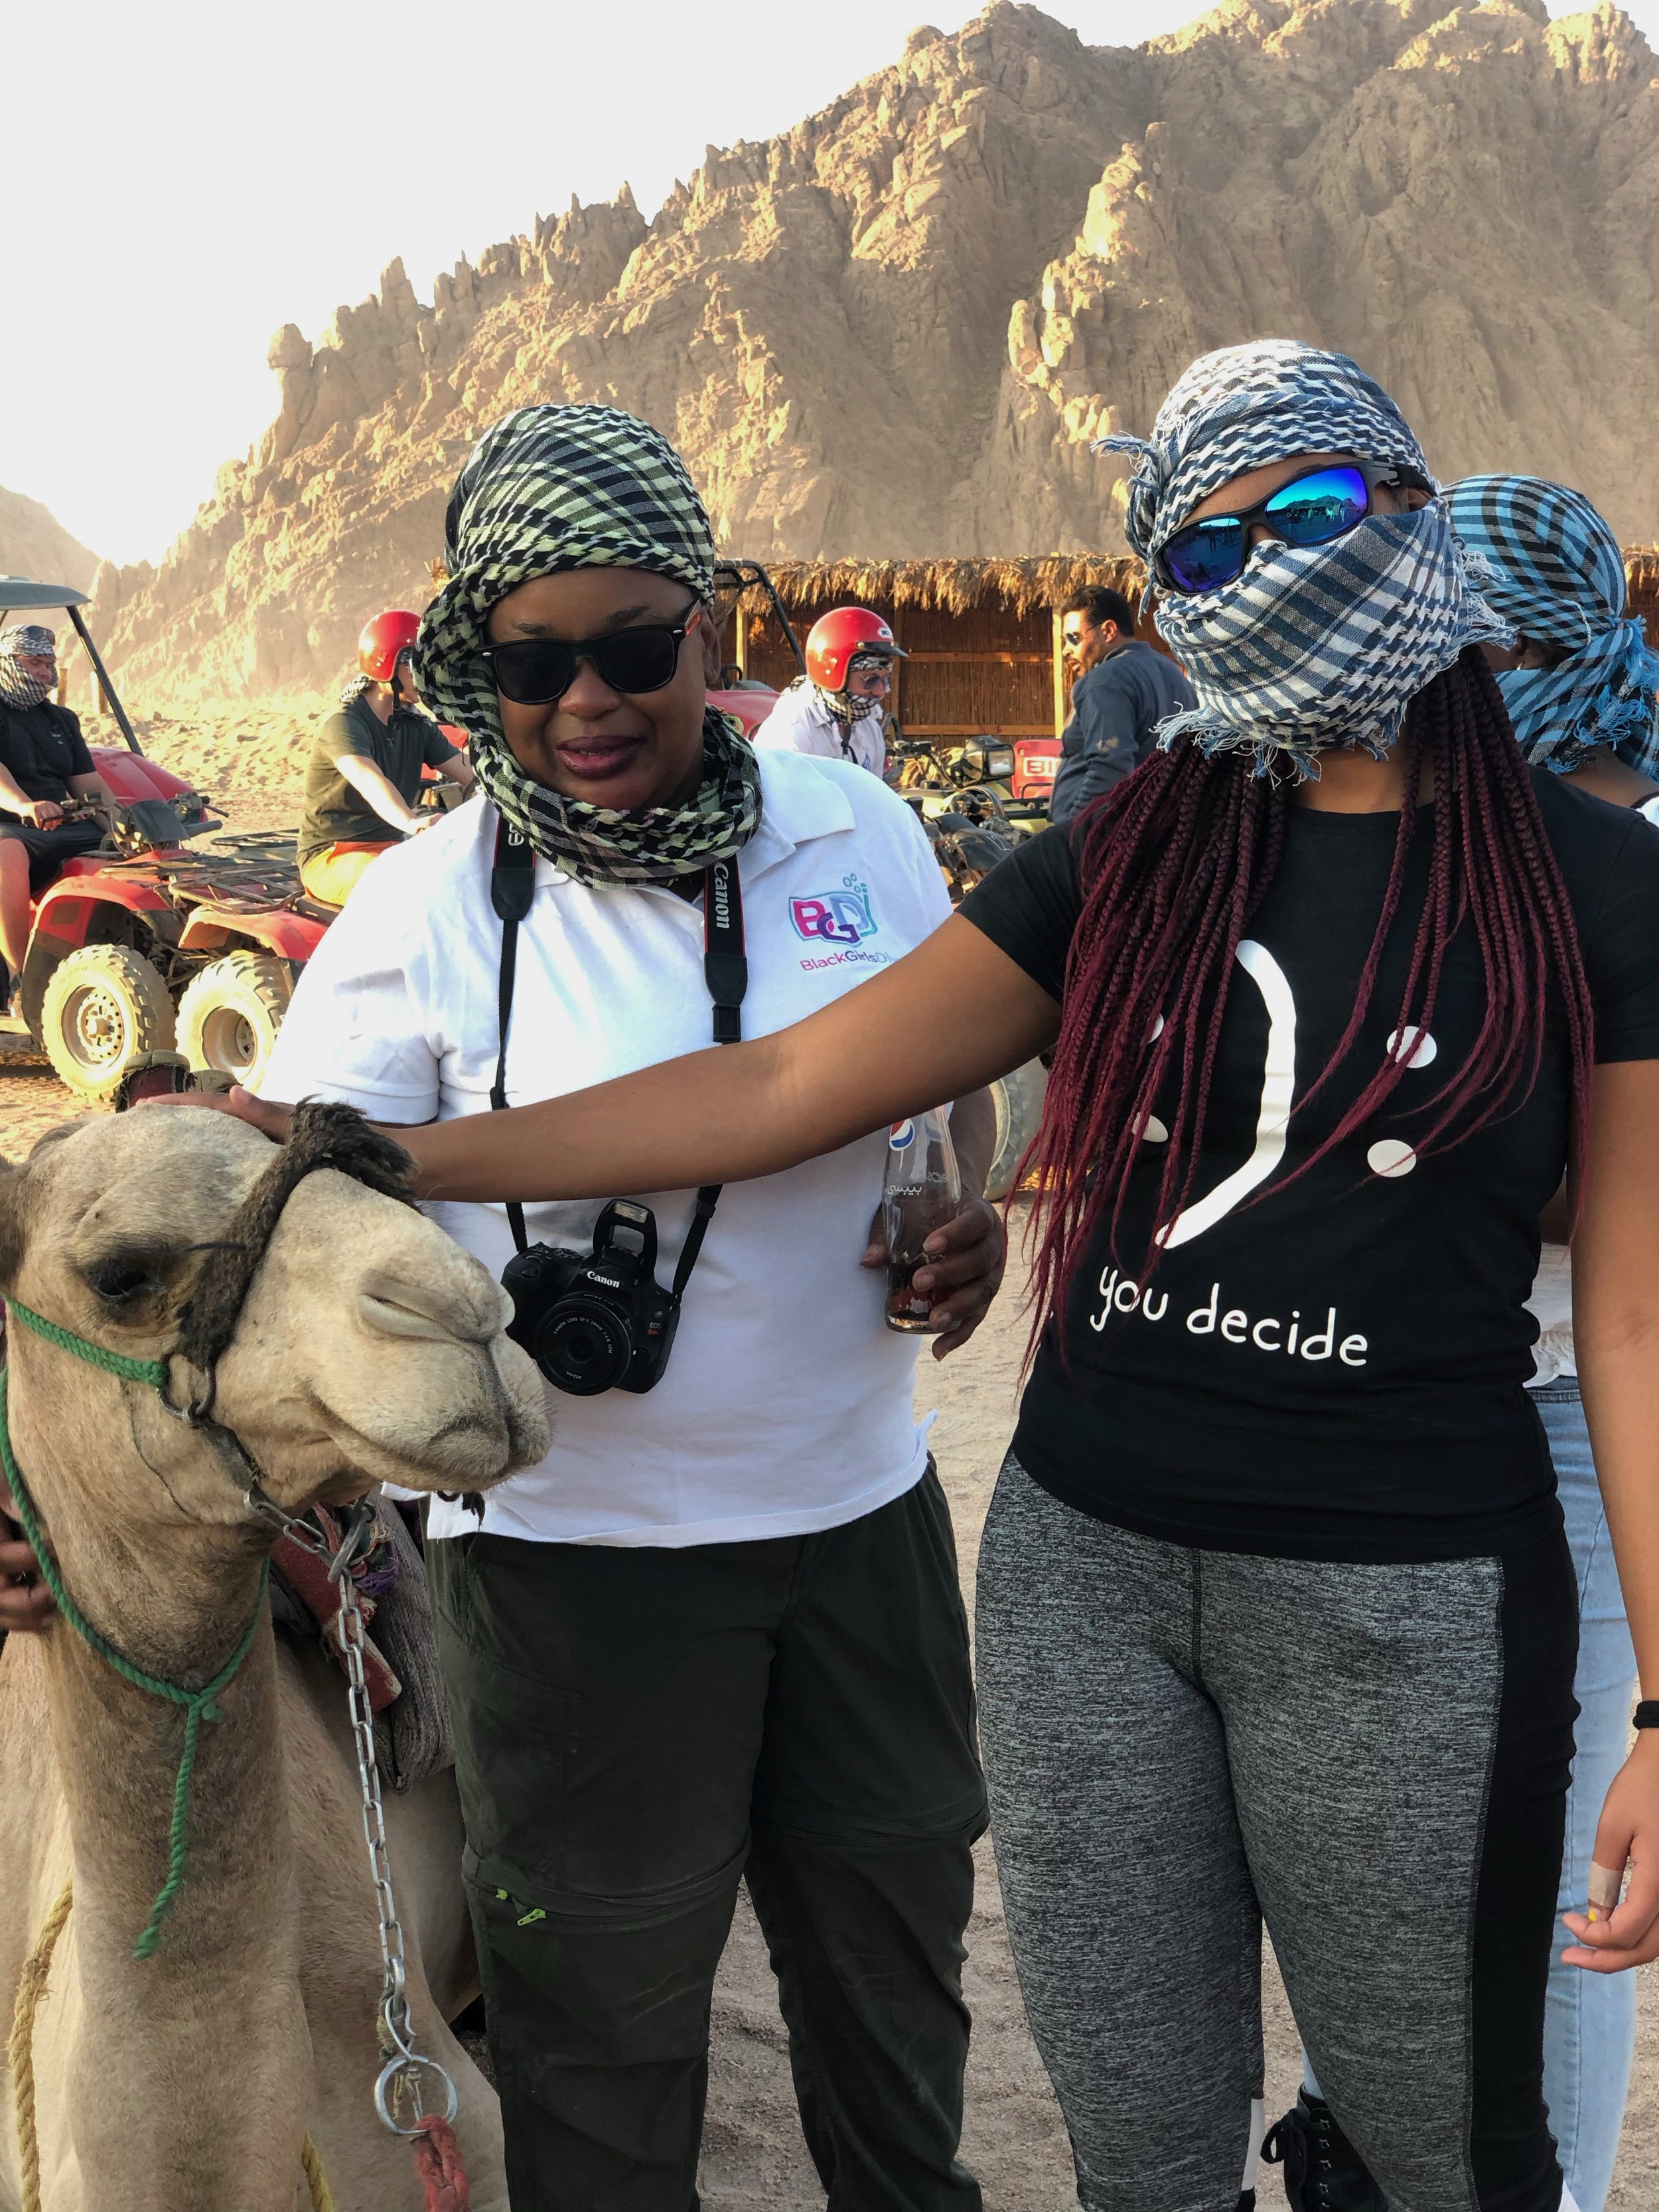 BGD Scholar Skye & Dr. Winrow with their travel camel